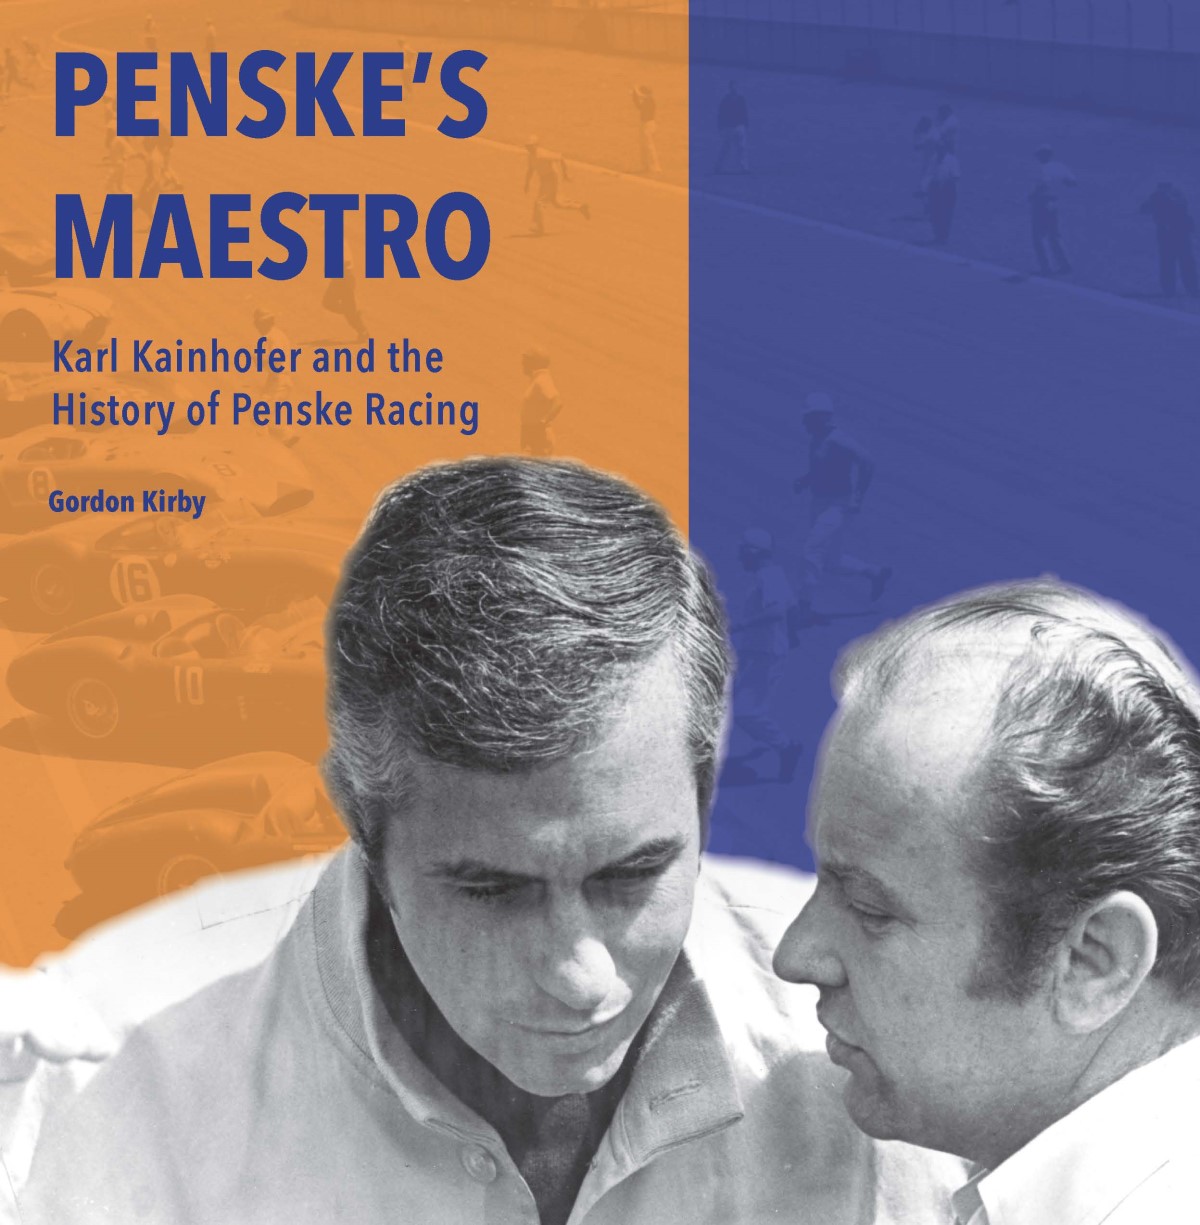 Penske's Maestro - Karl Kainhofer